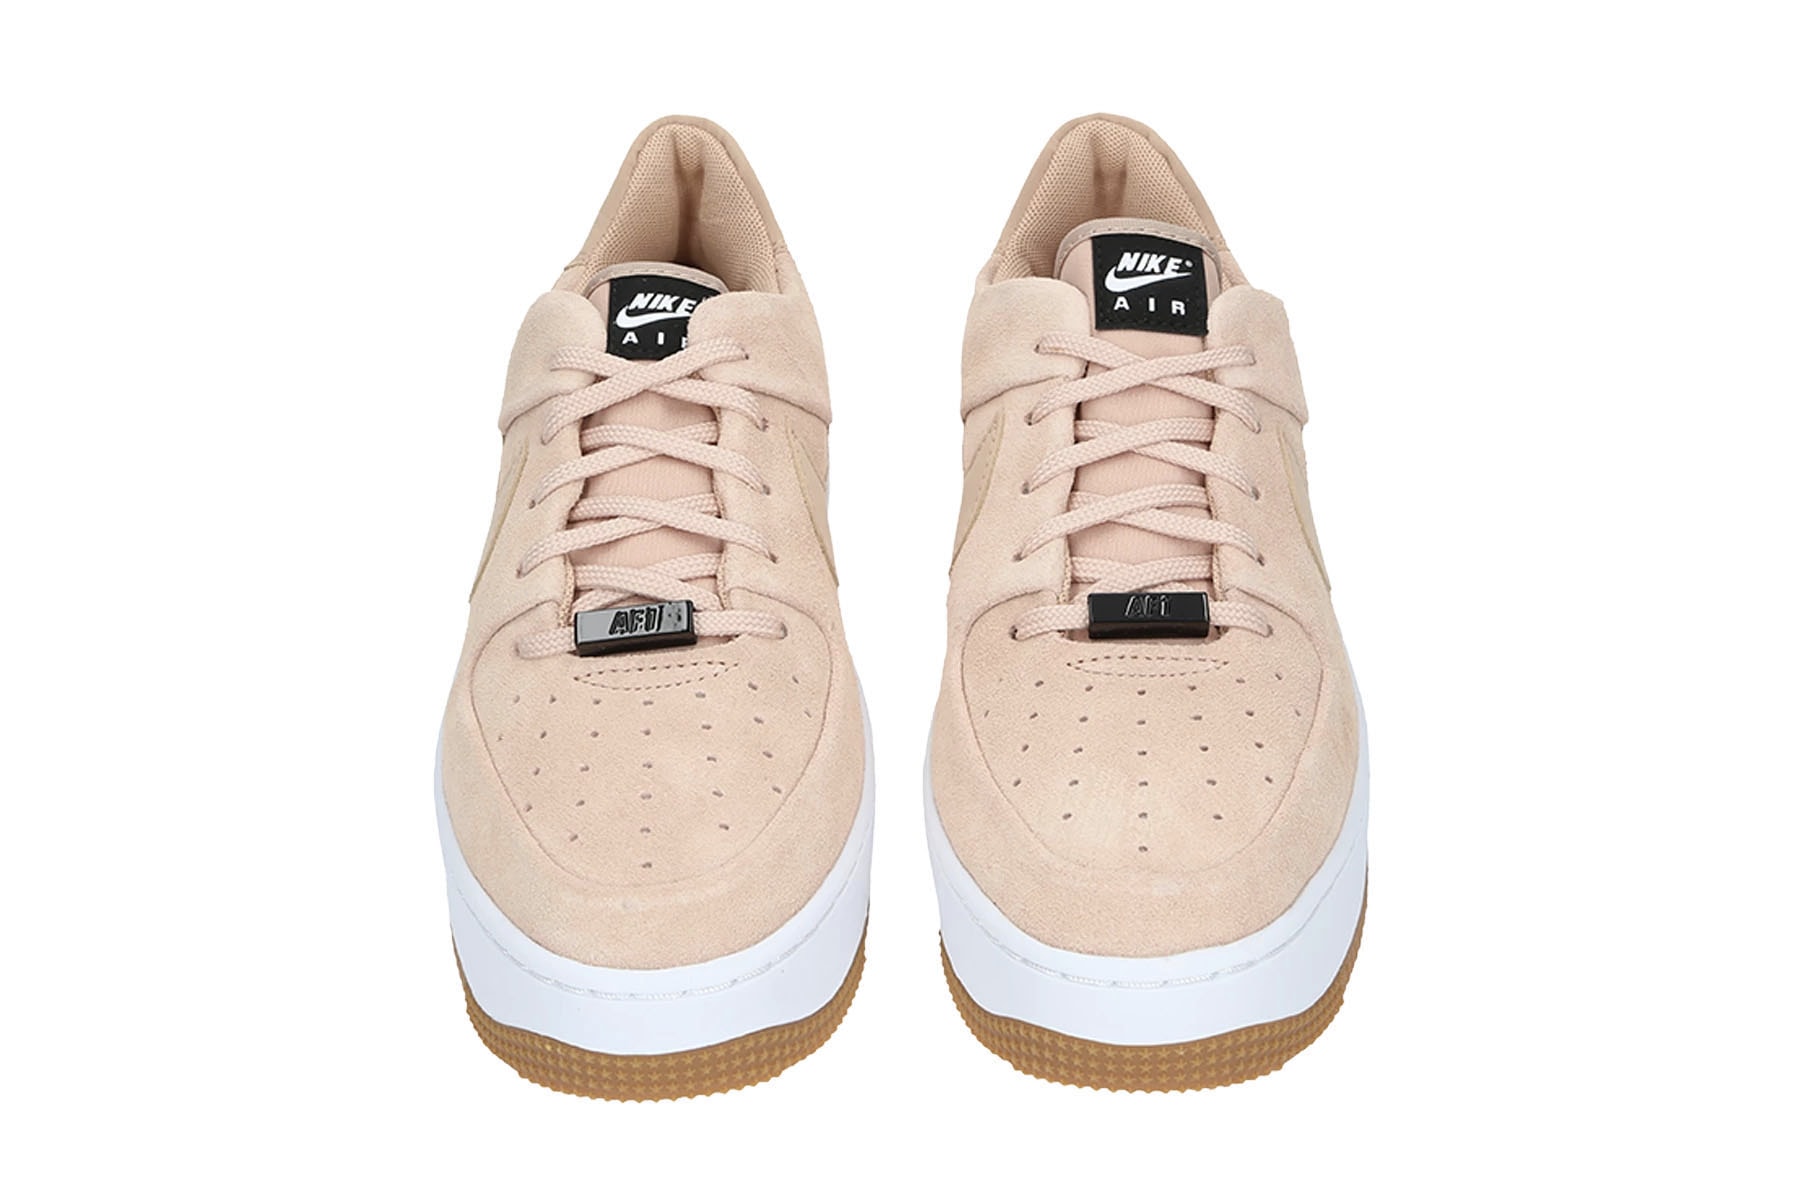 Nike Air Force 1 "Bio Beige" Sneaker Release Suede Pastel White Platform Sole Trainer Footwear Fall Winter